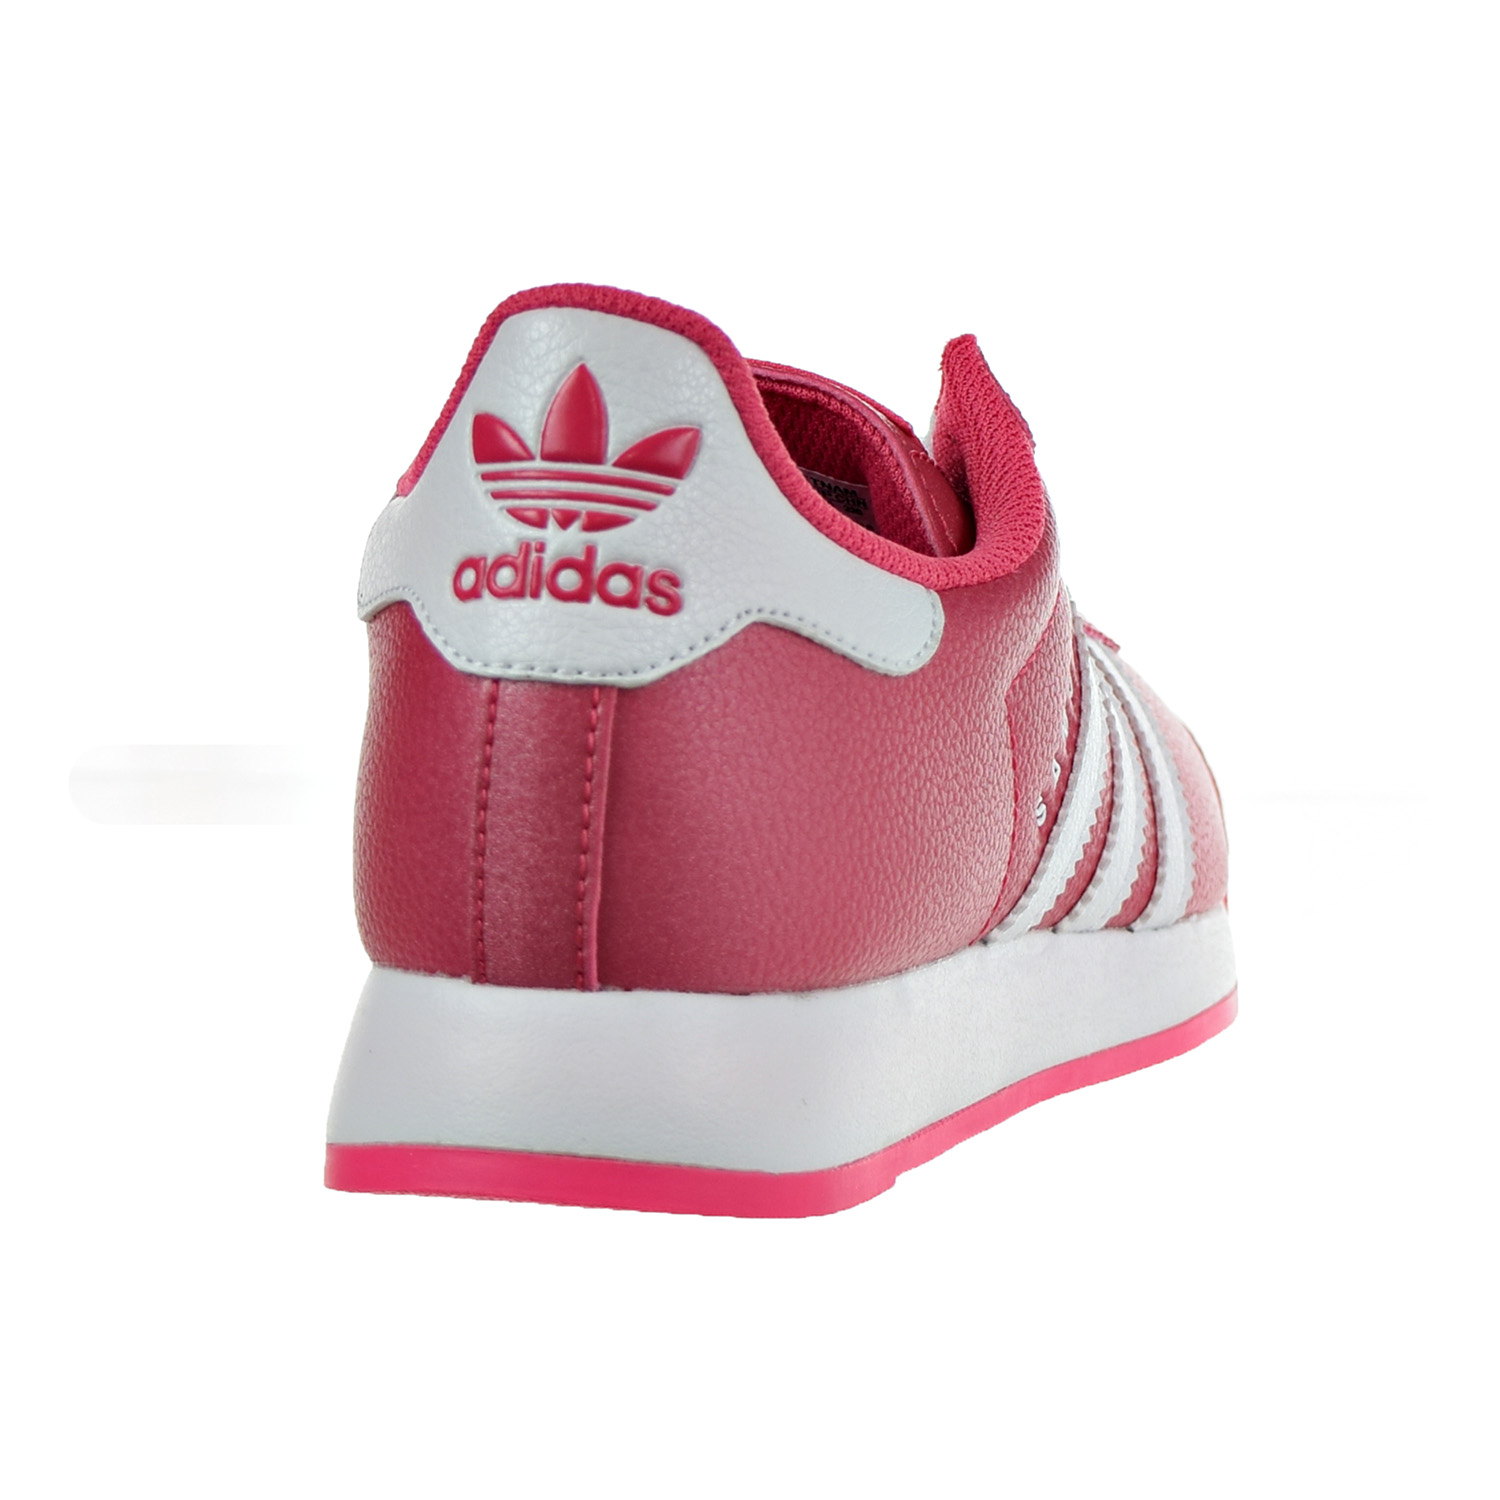 Adidas Samoa Big Kid's Shoes Pink-White b38963 | eBay